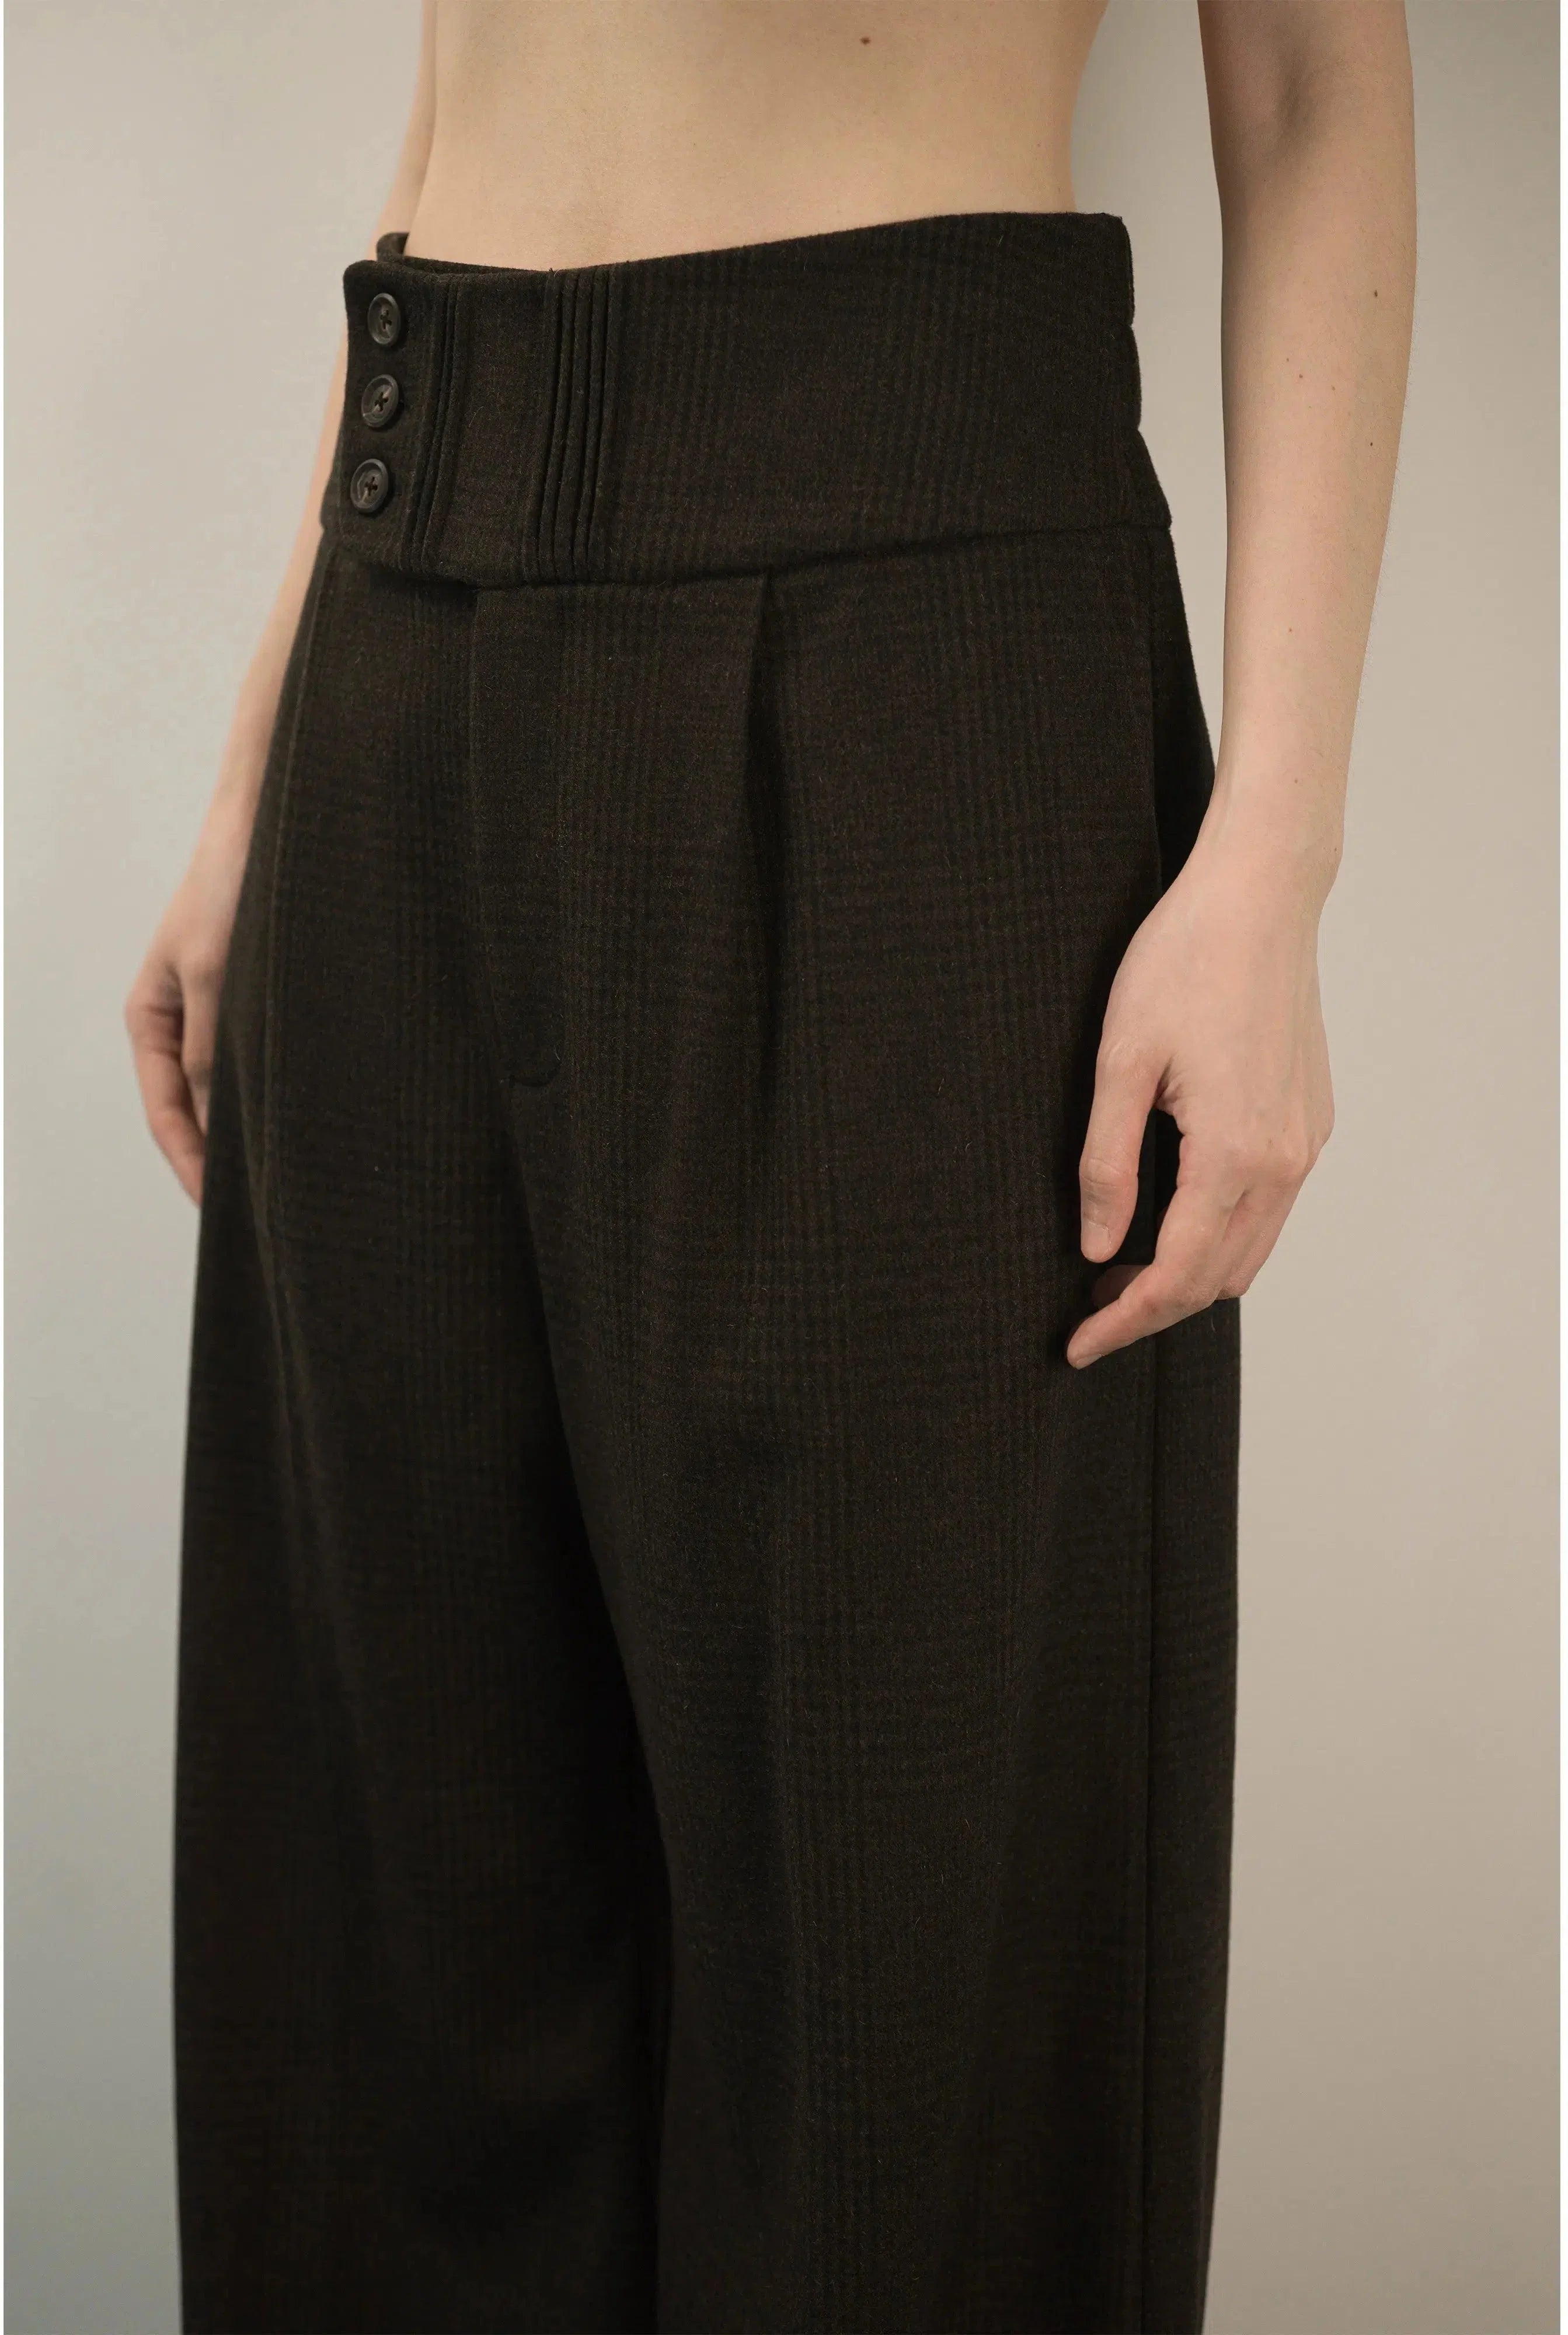 Lined Pants in Vintage Pattern - chiclara